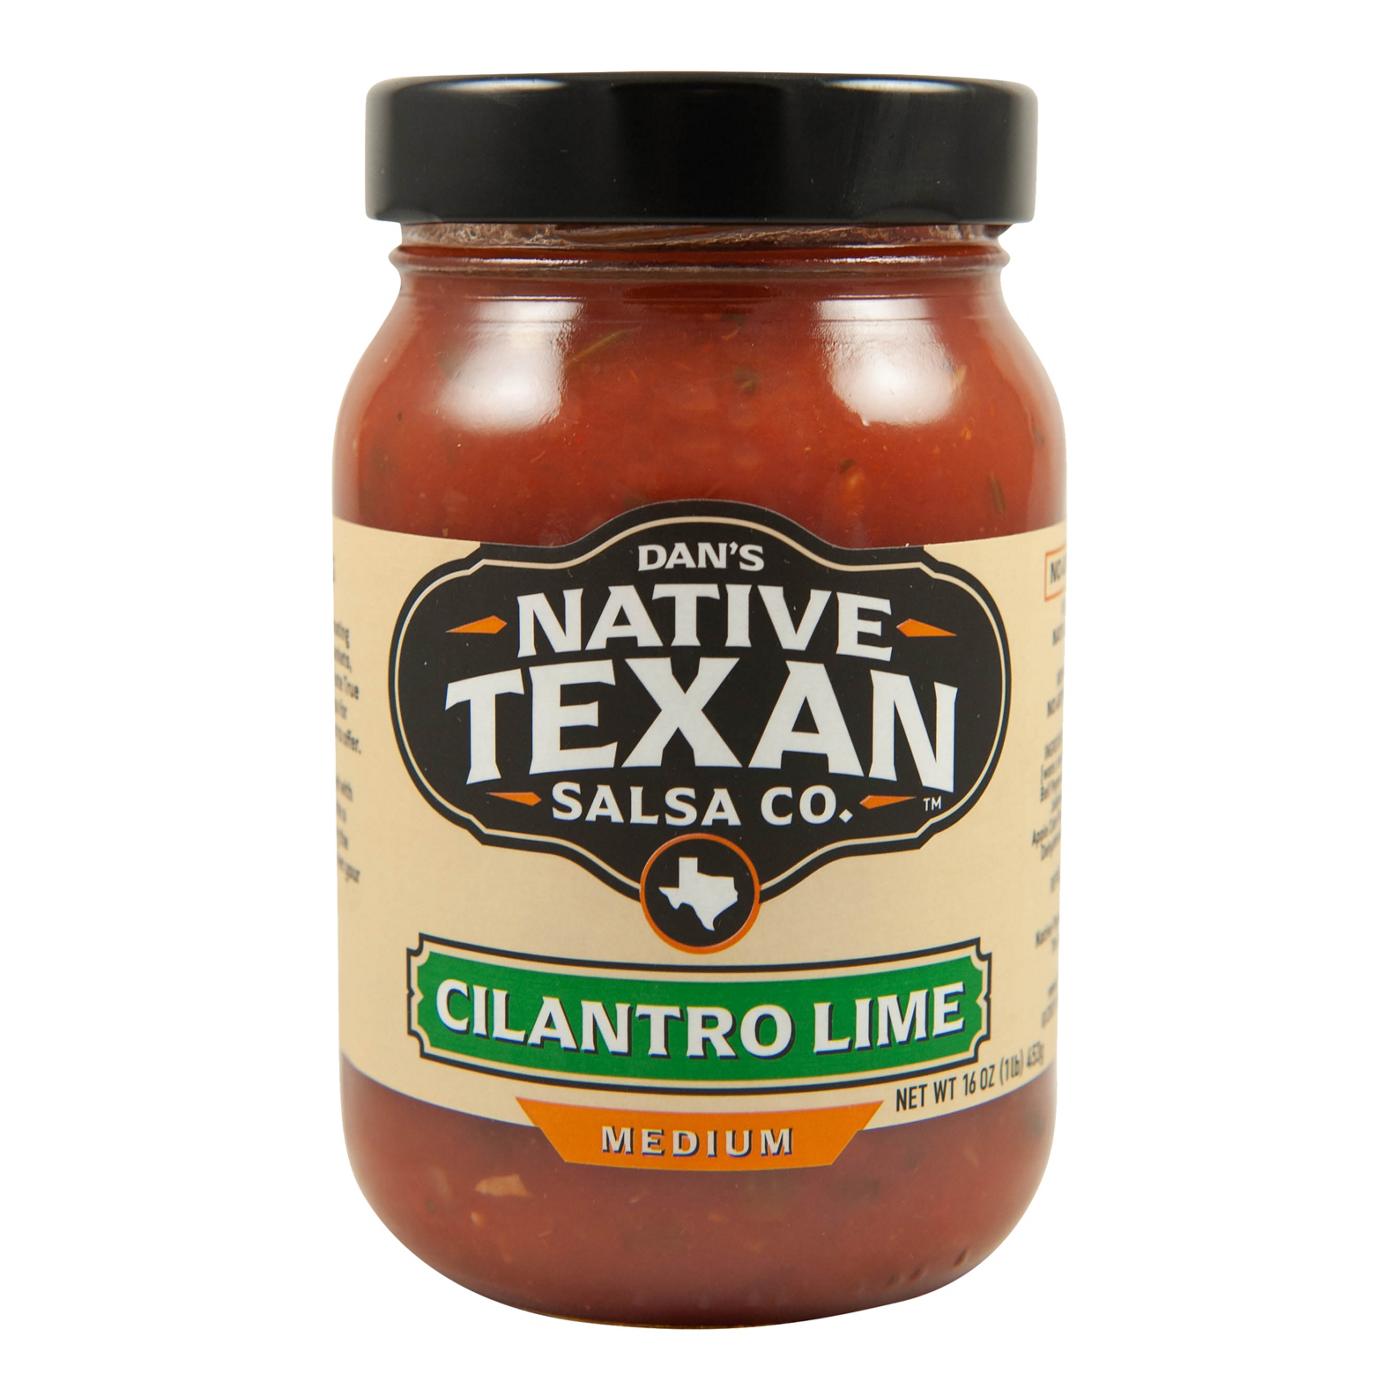 Native Texan Medium Cilantro Lime Salsa; image 1 of 2